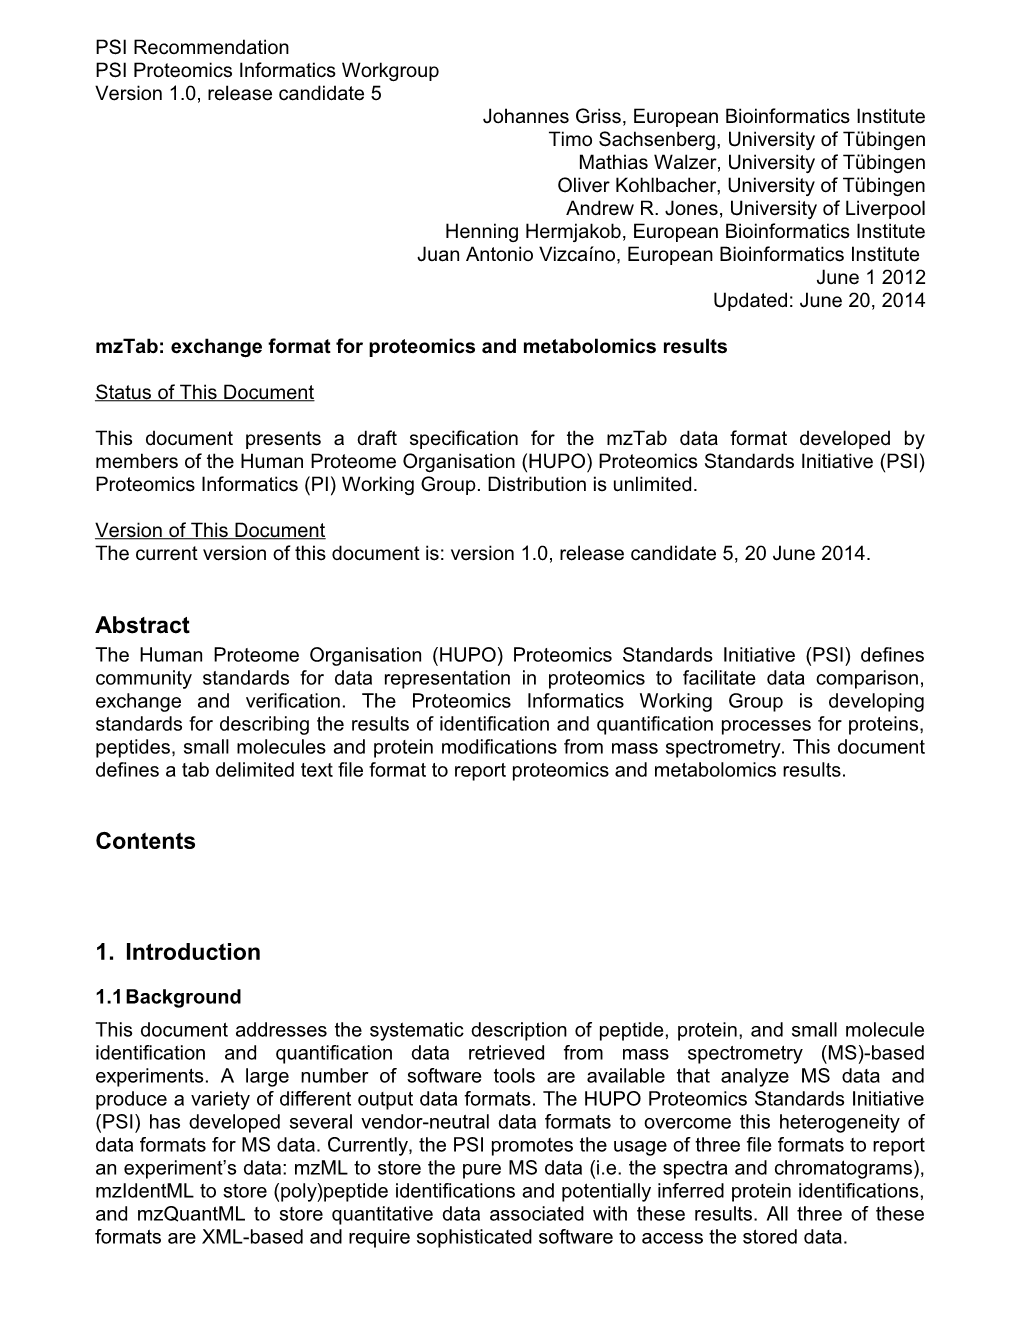 Mztab Specification Document s1